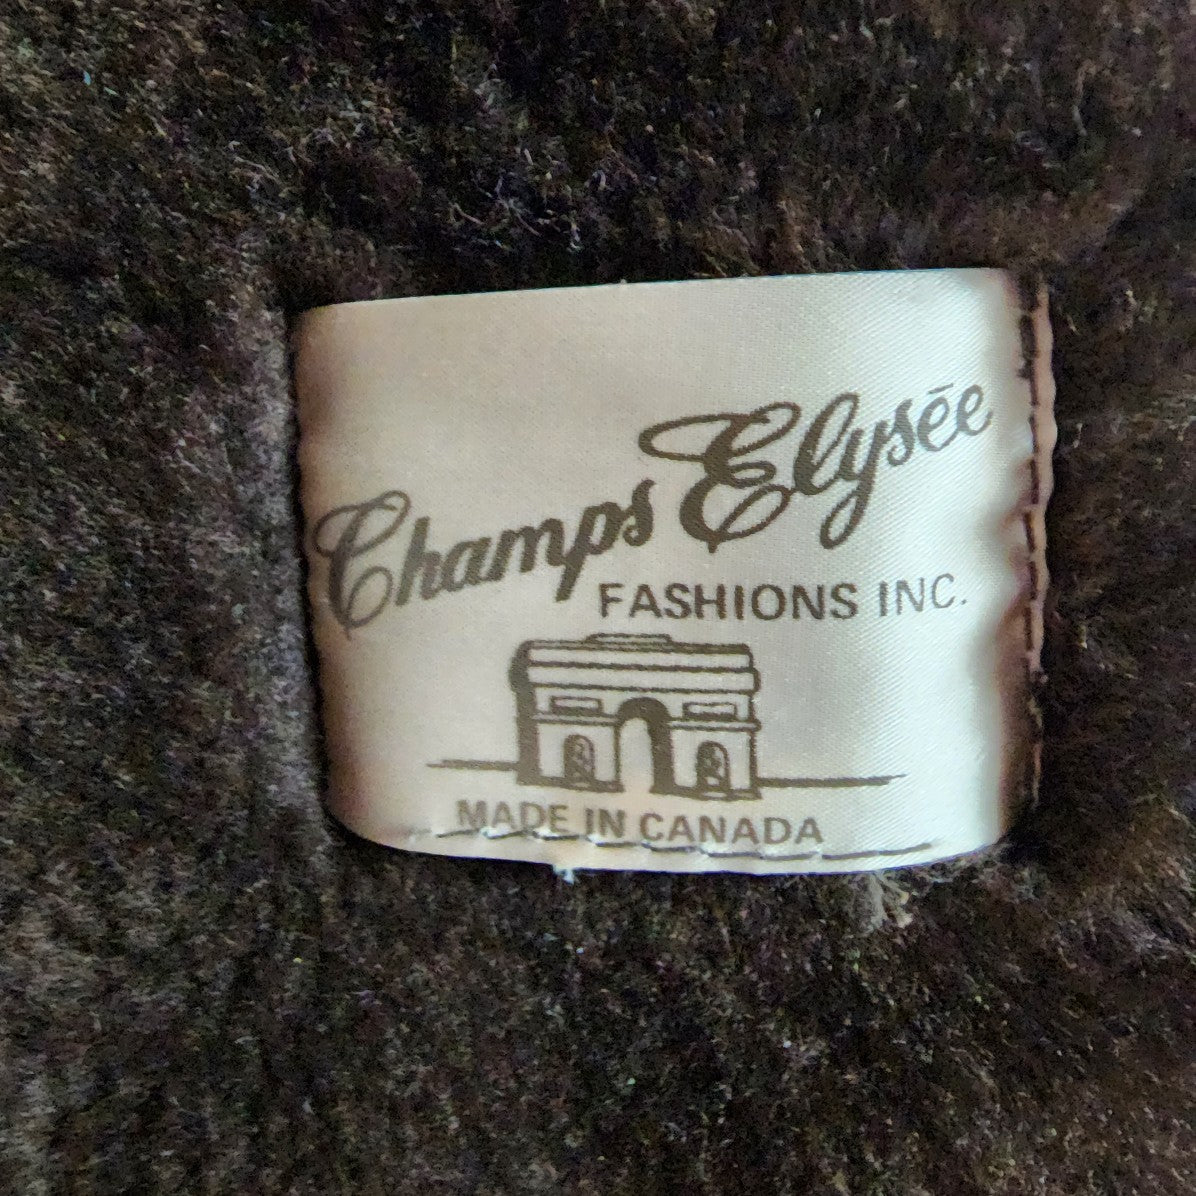 Vintage Champs Elysee Sheep Skin Coat Size M/L